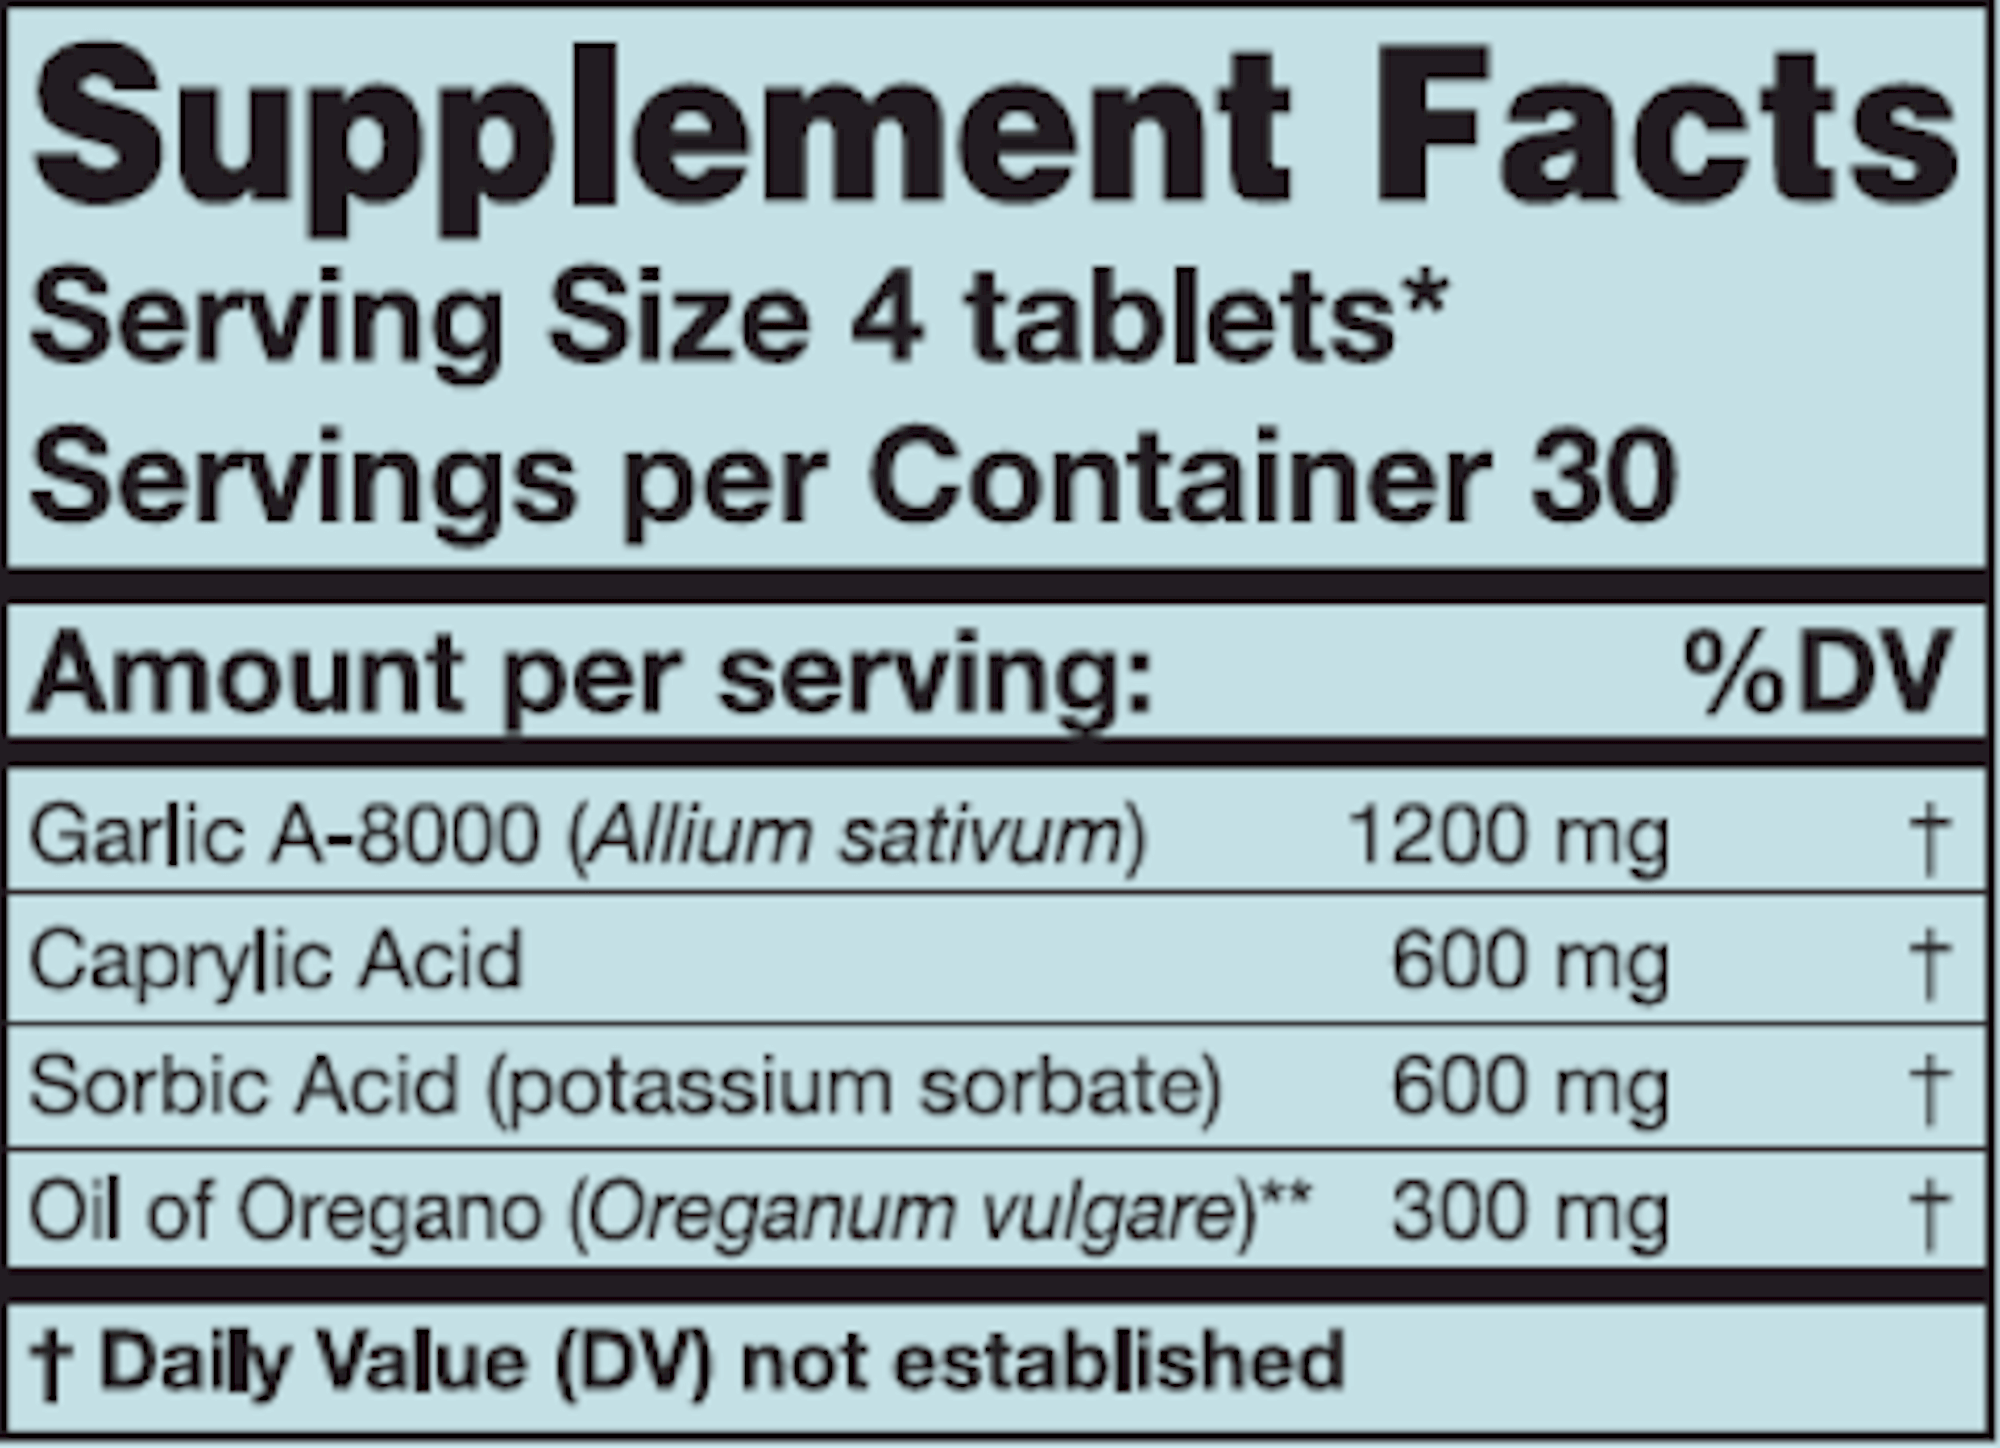 Karuna CapriPlus Ingredients Label Image